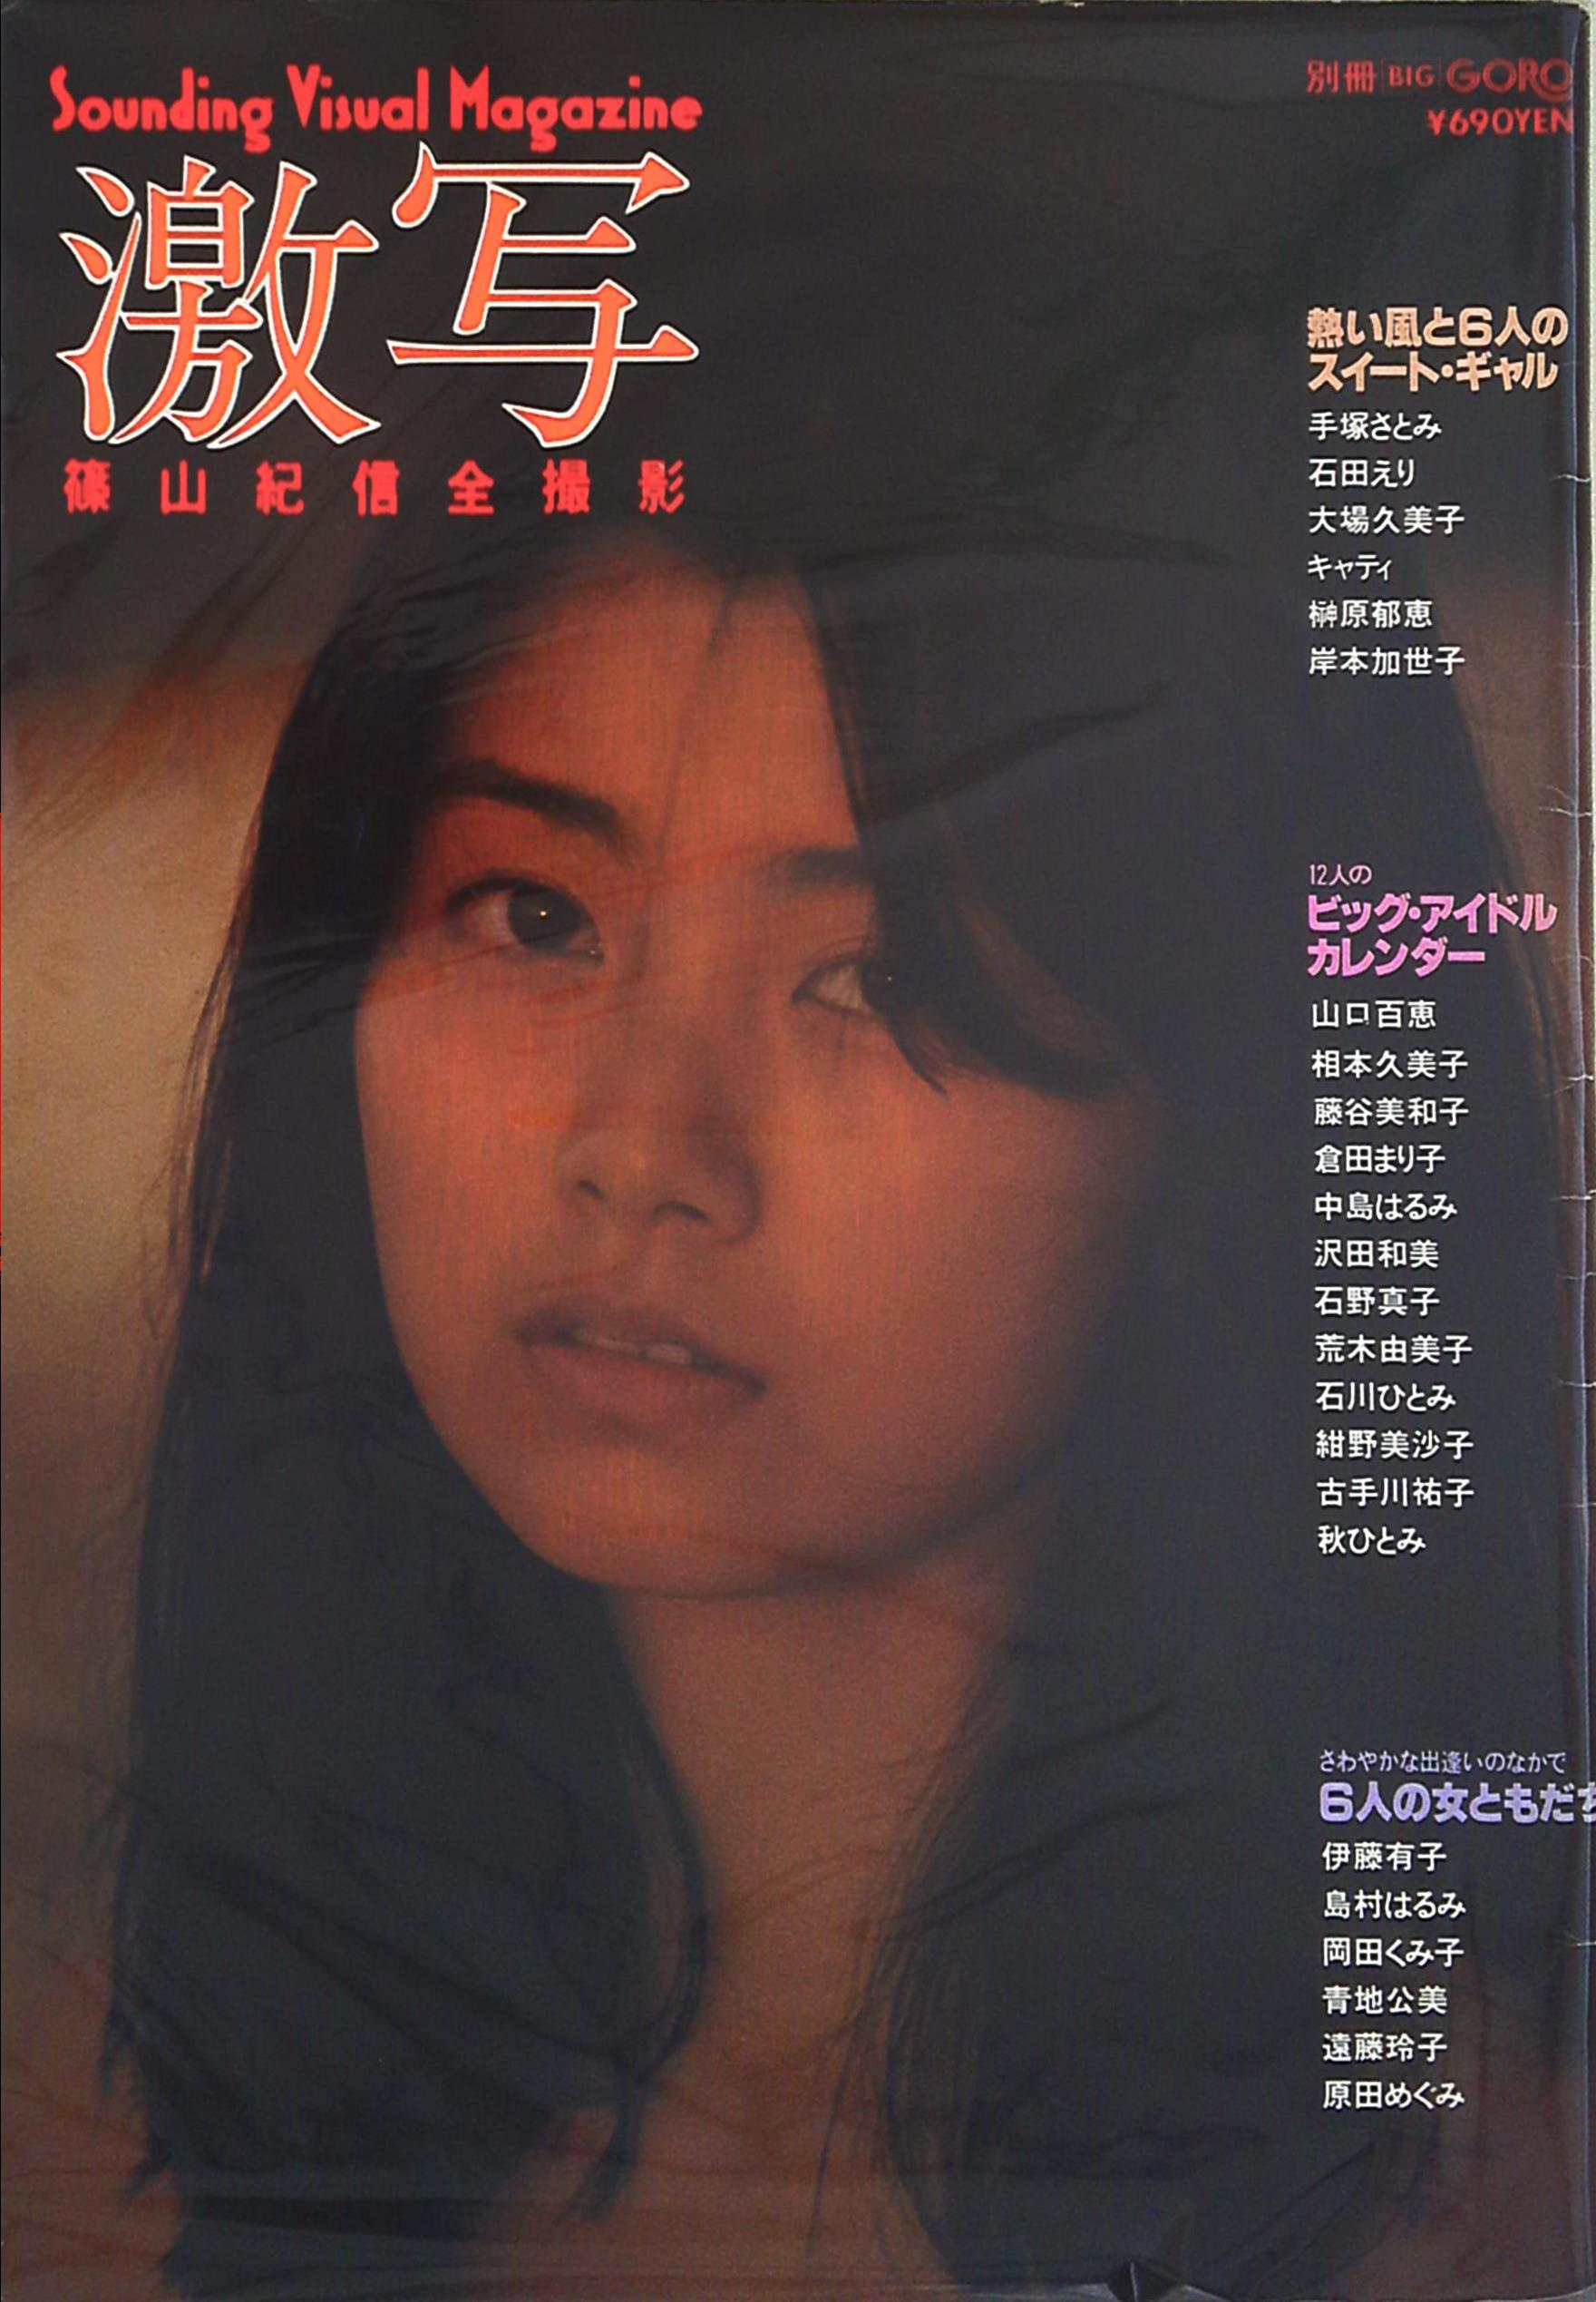 Shogakukan Kishin Shinoyama Shooting Gekisha Separate Goro1980 Big May Edition Pinup Missing 8005 And The Mandarake 在线商店